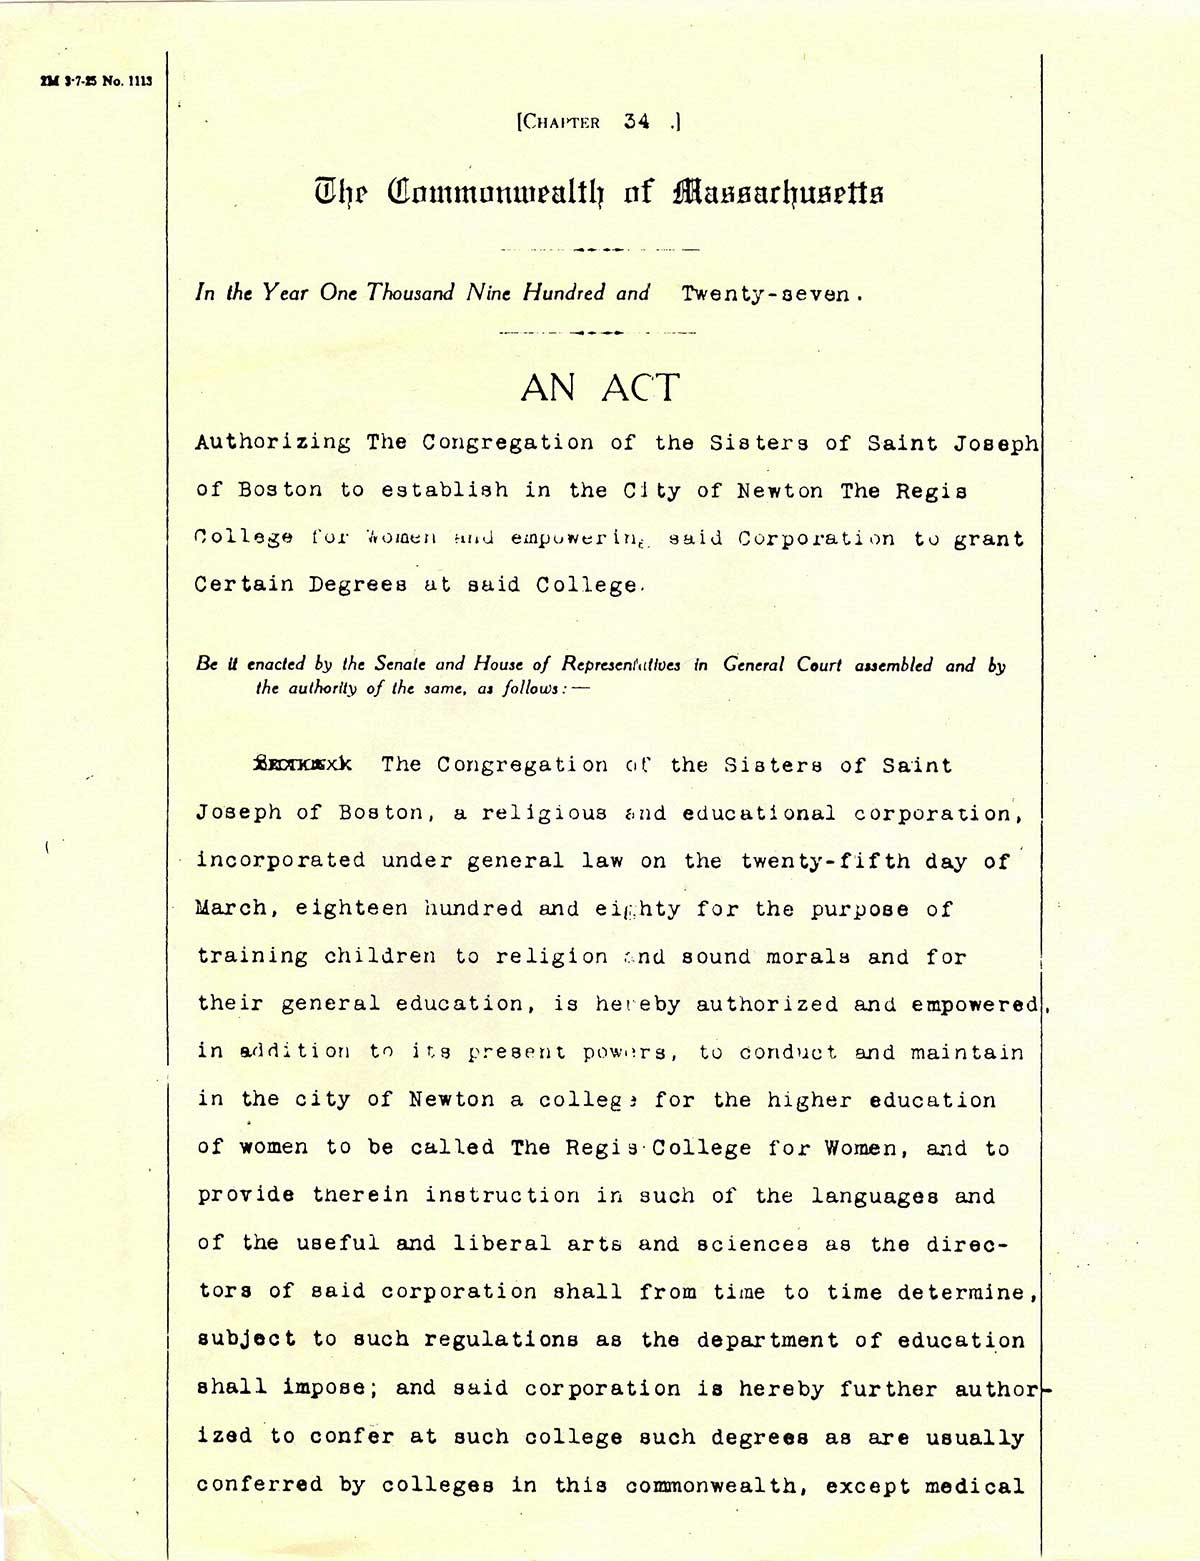 The original Regis College charter 1927